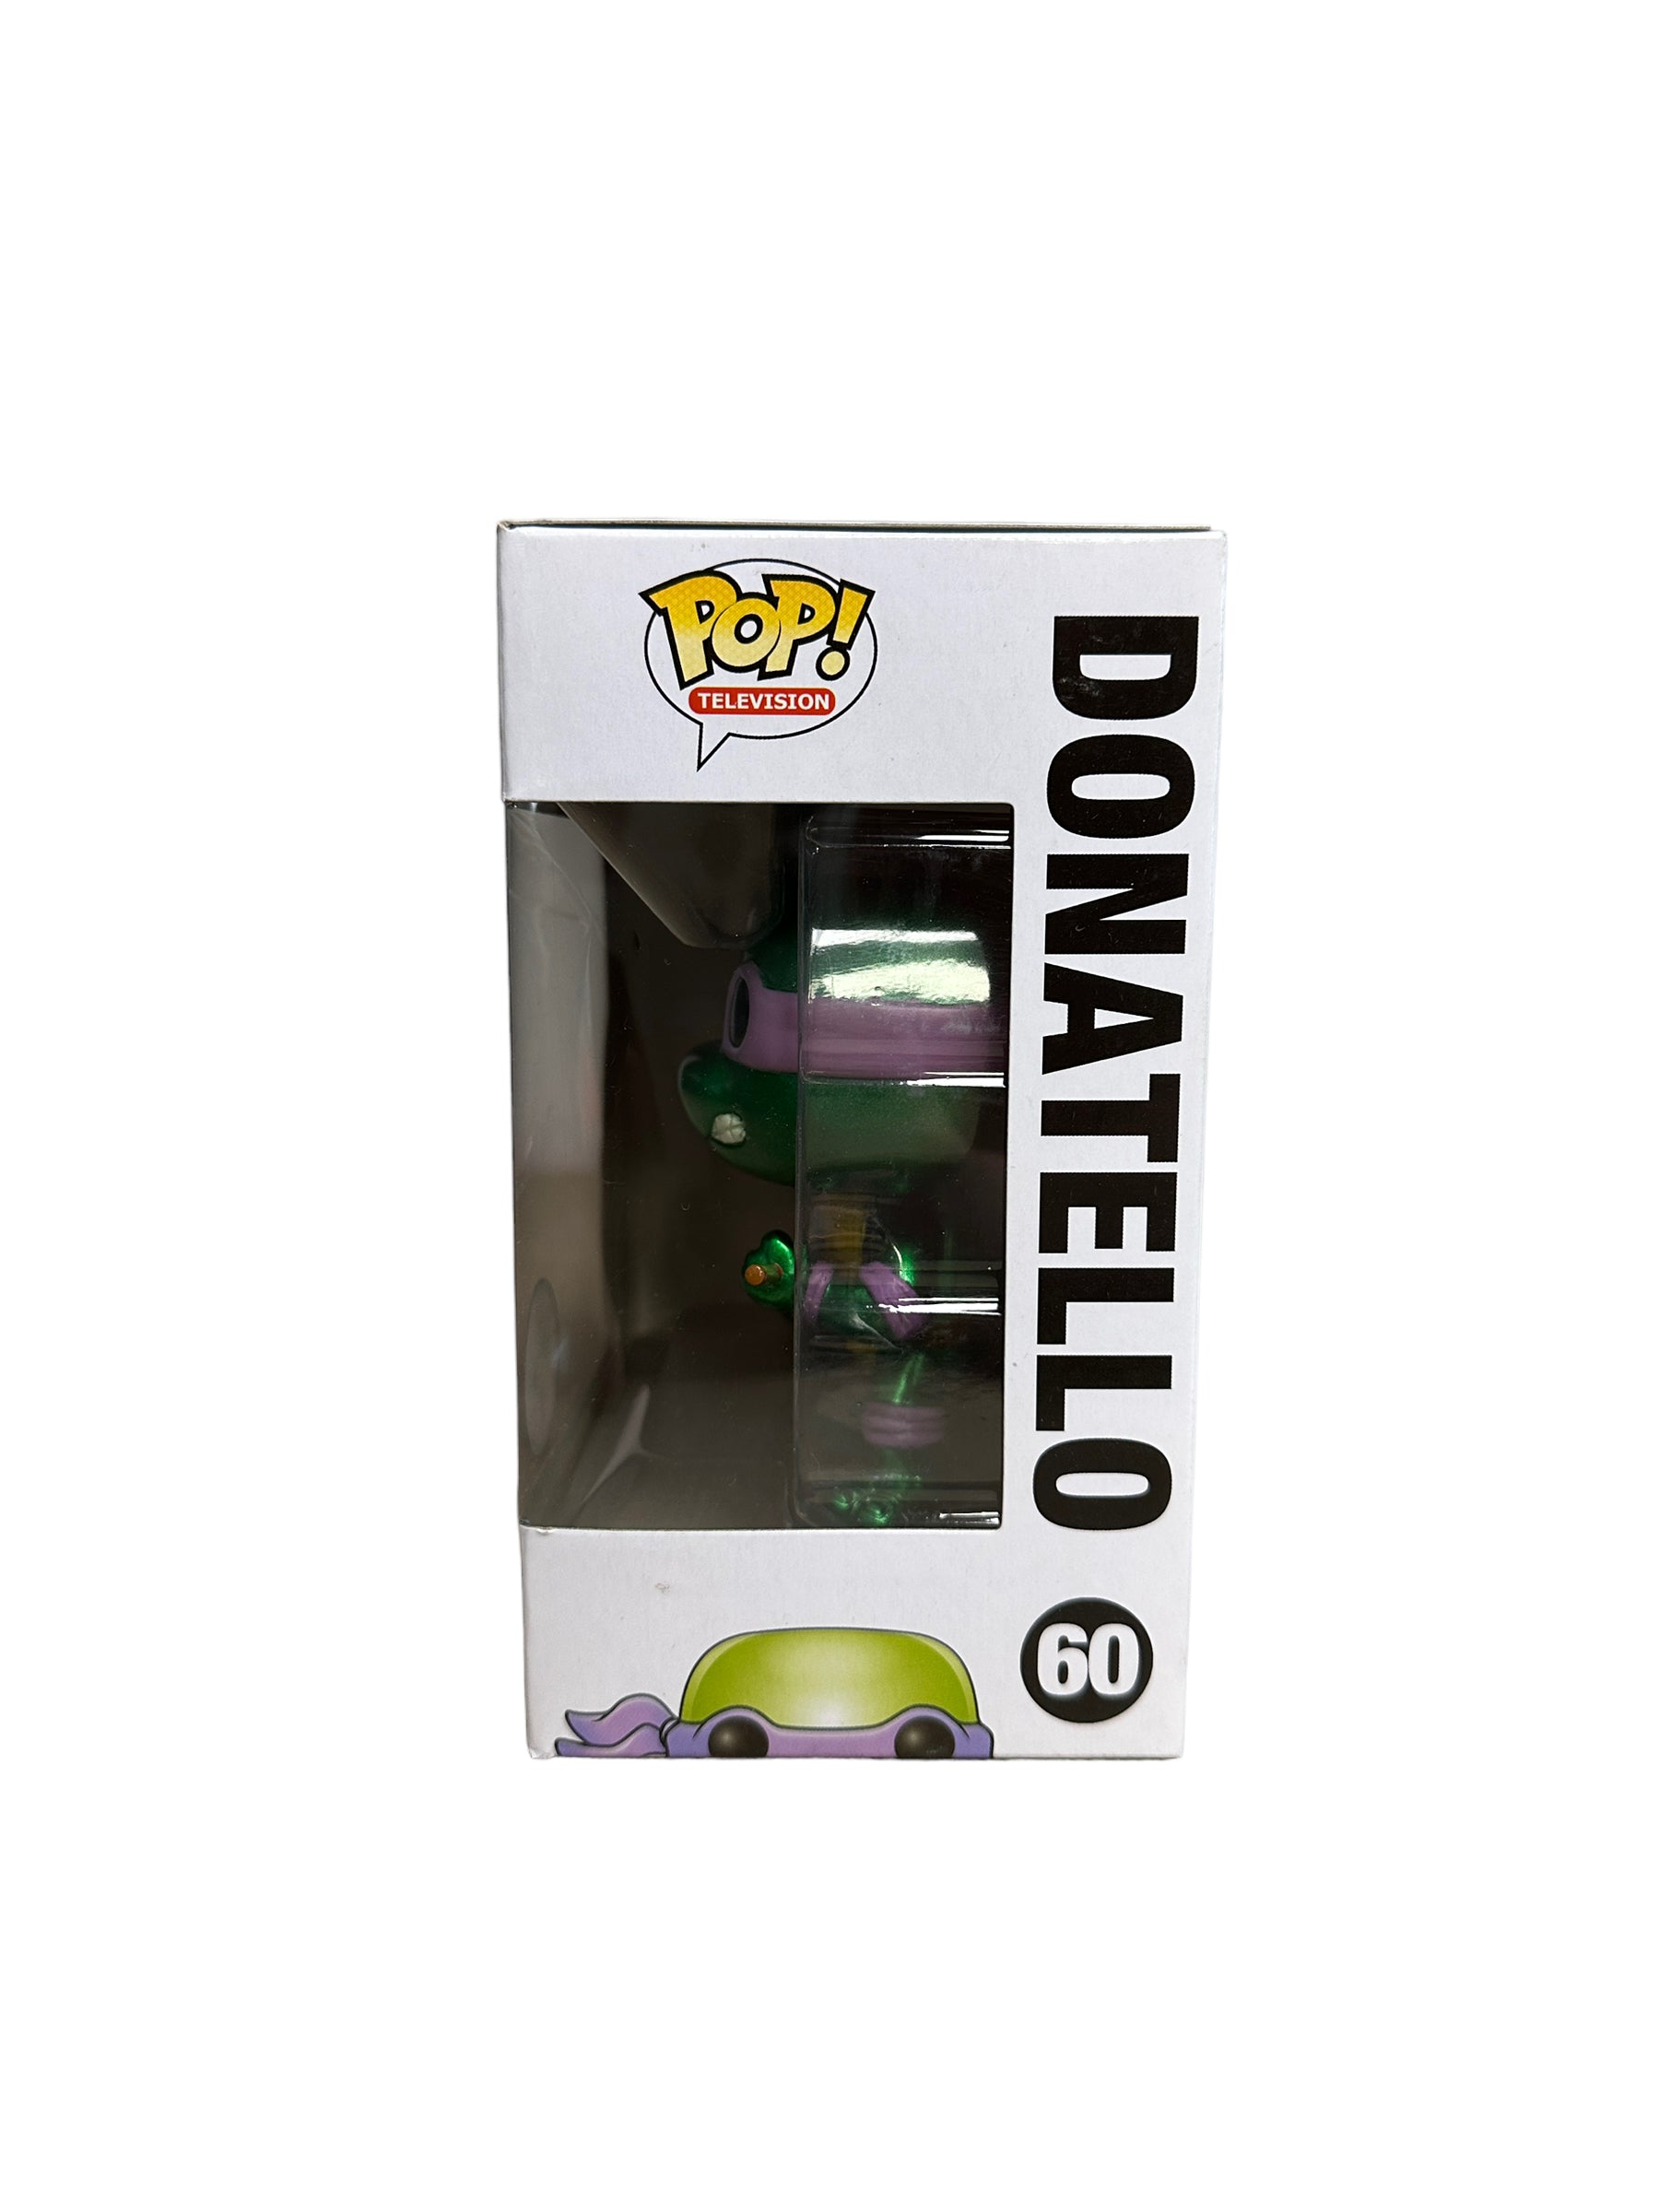 Donatello #60 (Metallic) Funko Pop! - Teenage Mutant Ninja Turtles - SDCC 2013 Exclusive LE1008 Pcs - Condition 8.5/10